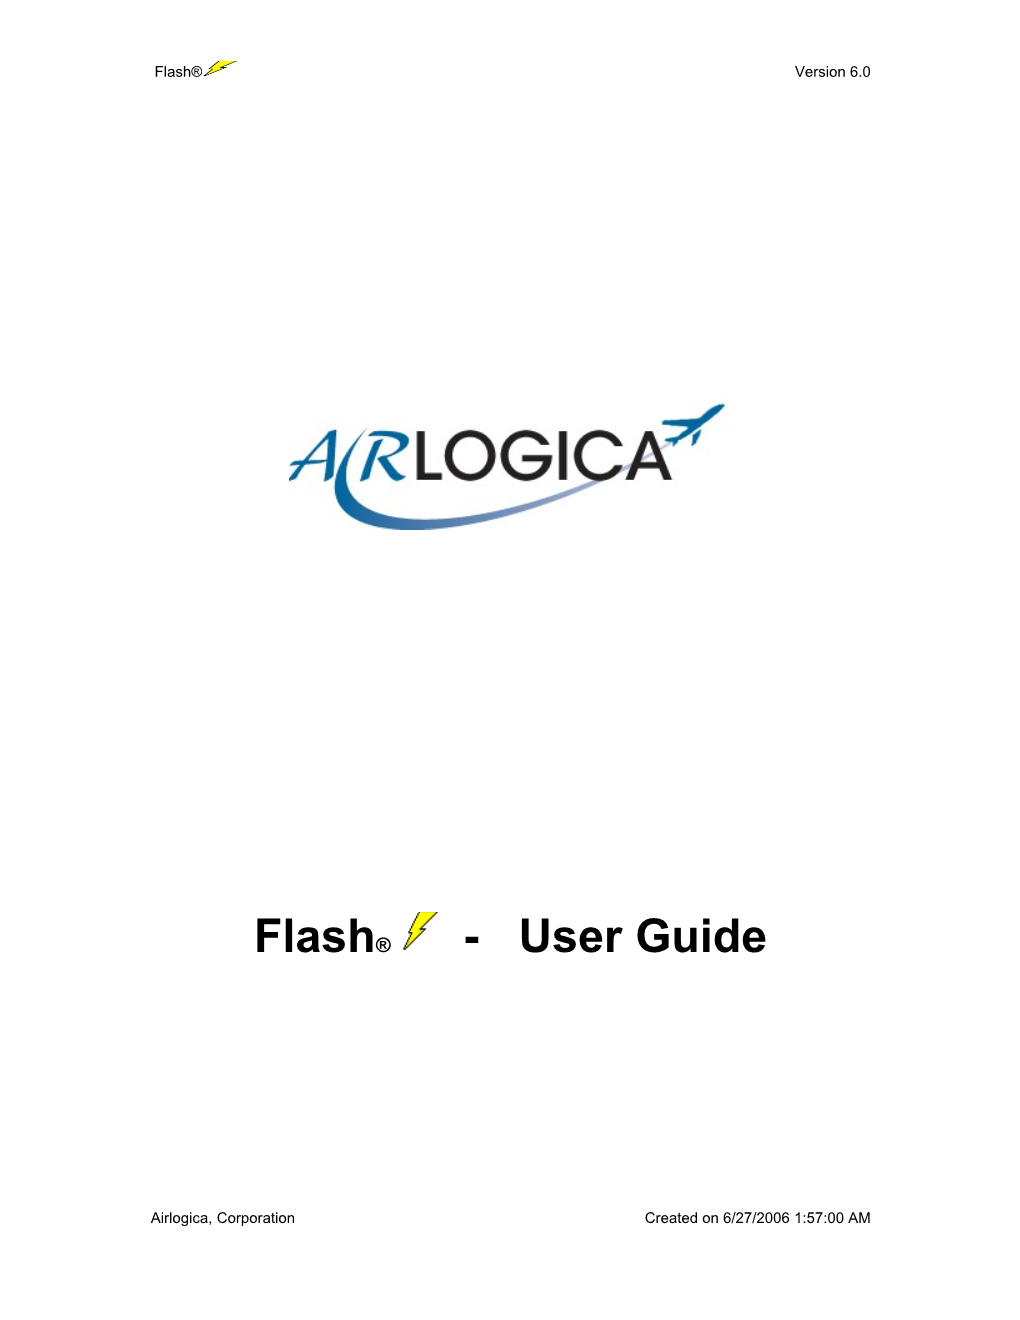 Flash User Guide